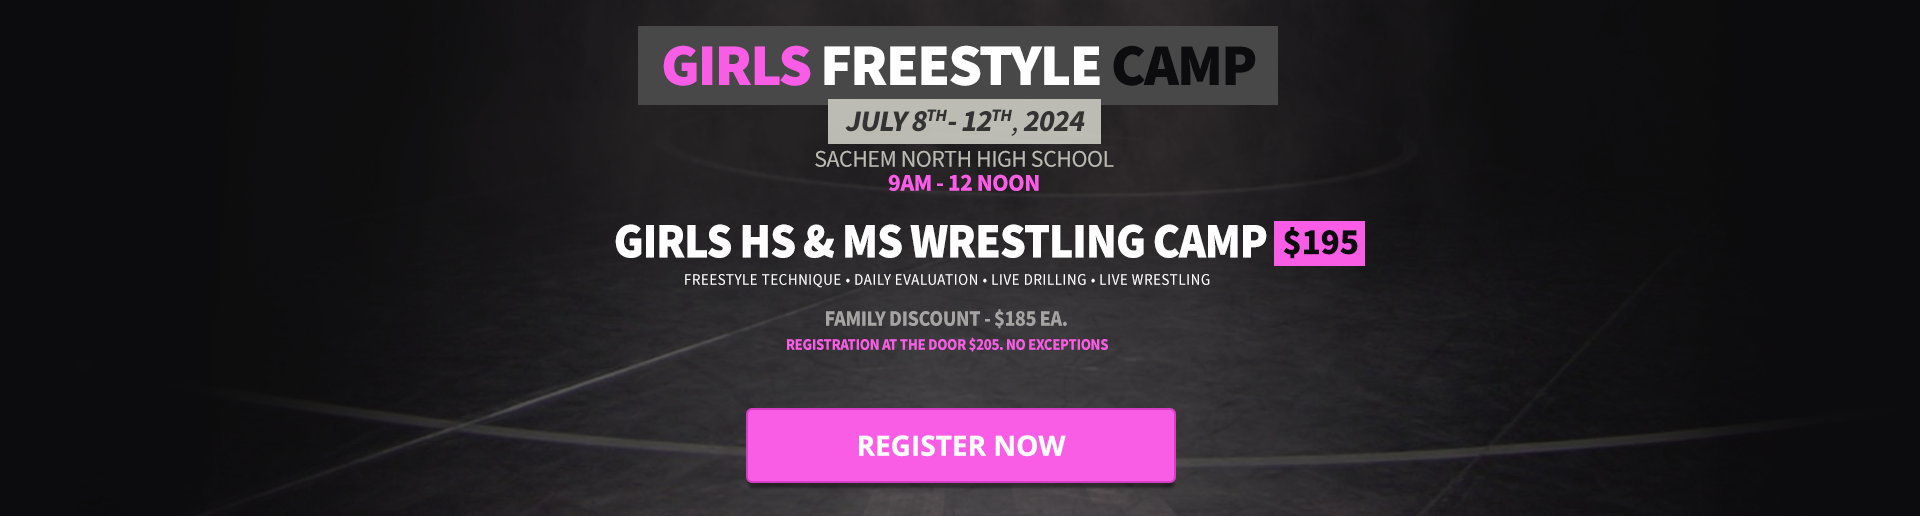 Girls Freestyle Camp